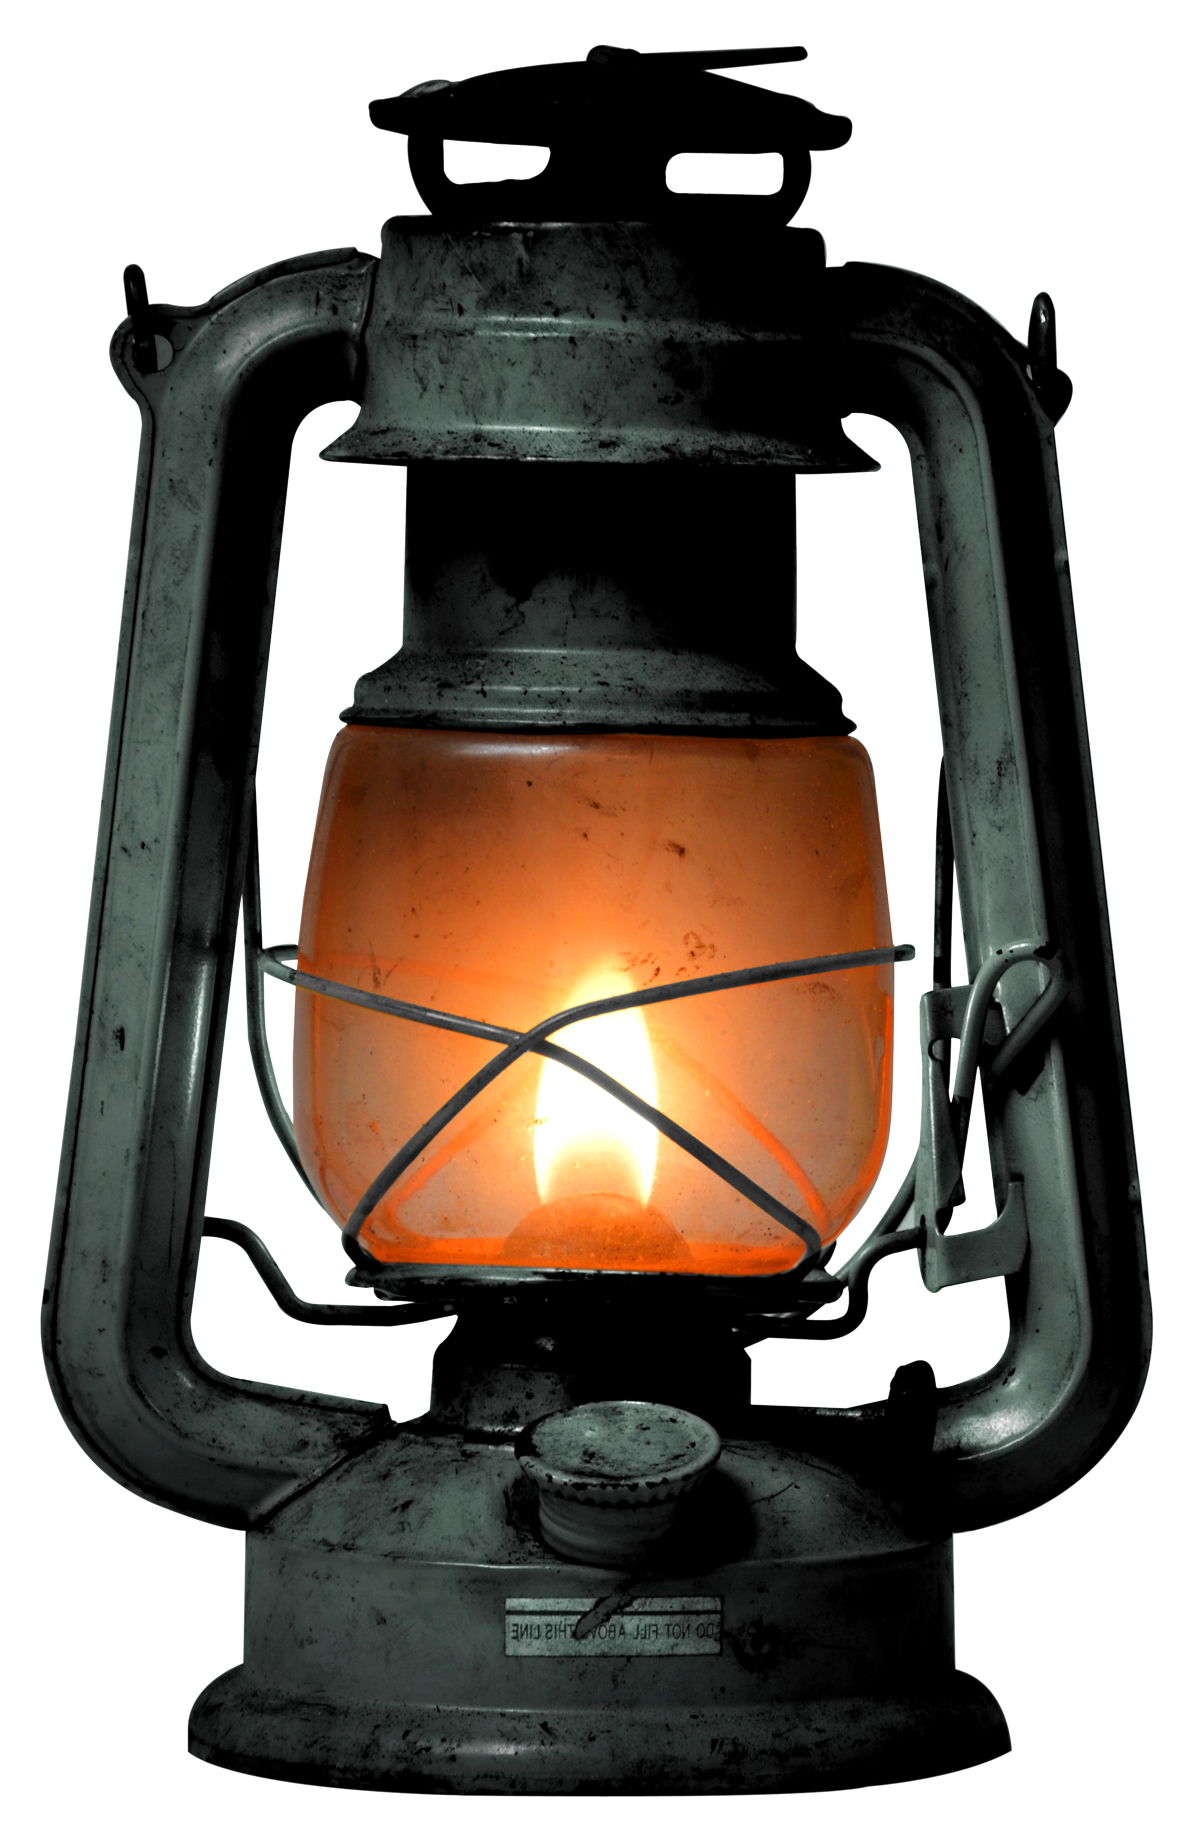 PNG Oil Lamp Transparent Oil Lamp.PNG Images. | PlusPNG